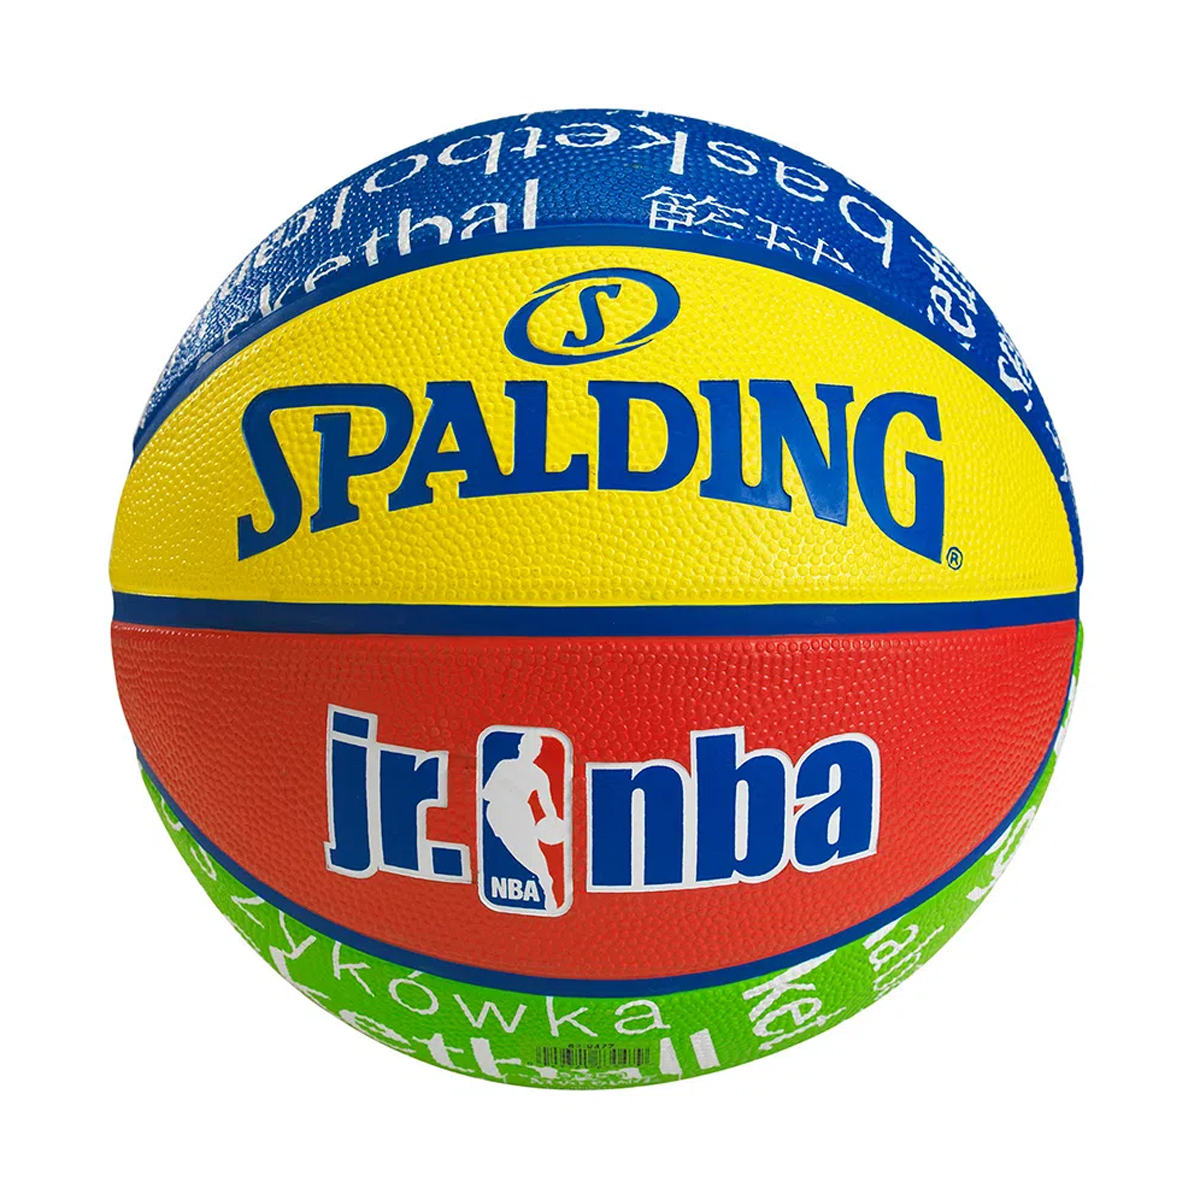 Pelota Spalding NBA Outdoor,  image number null